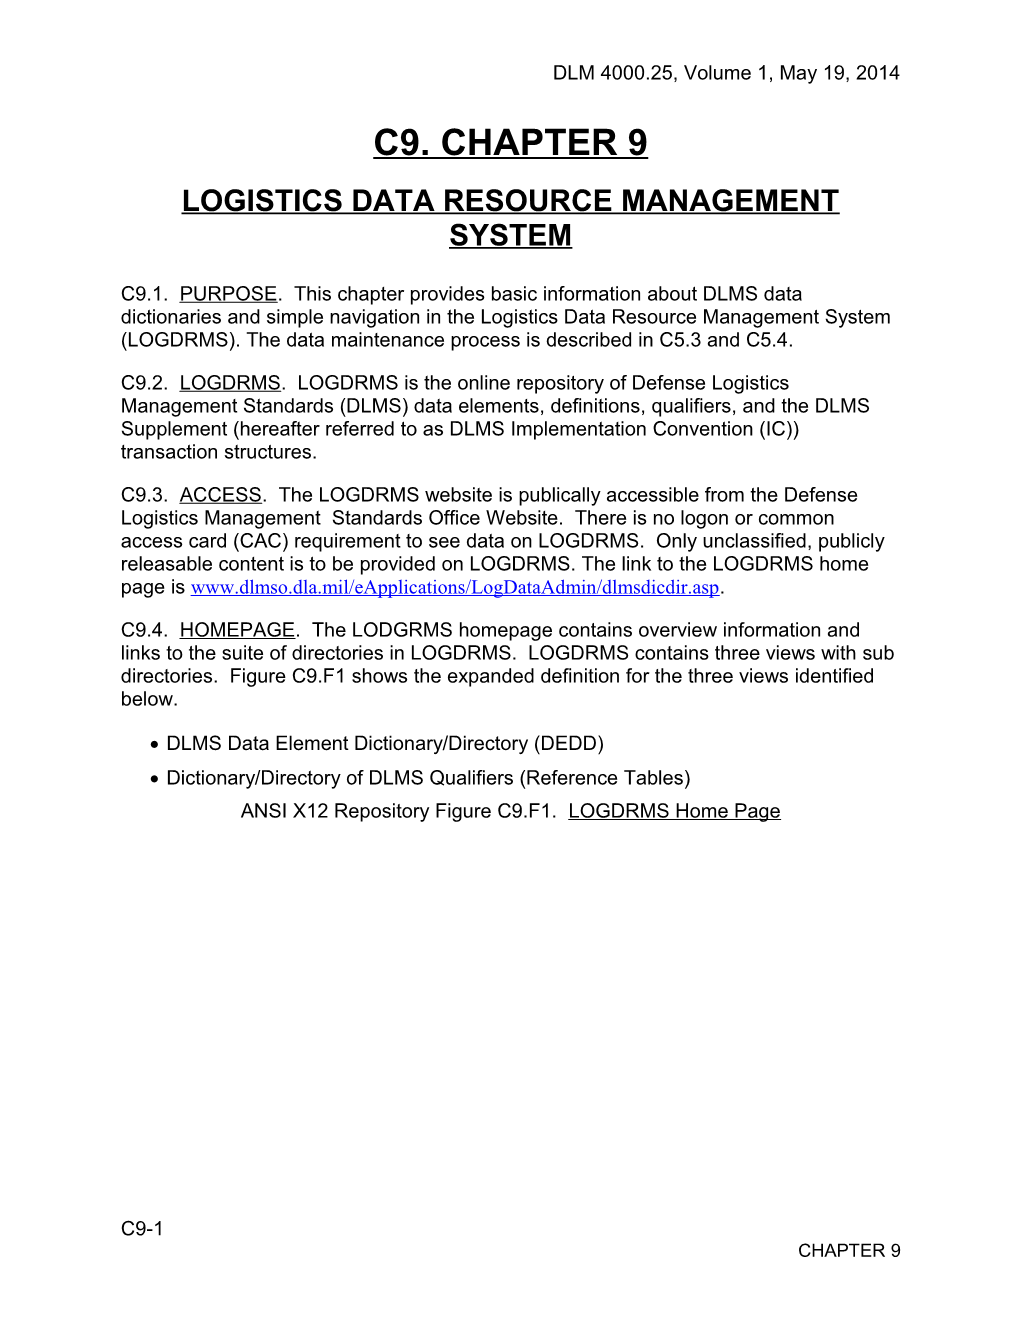 Chapter 9 - Logistics Data Resource Managment System